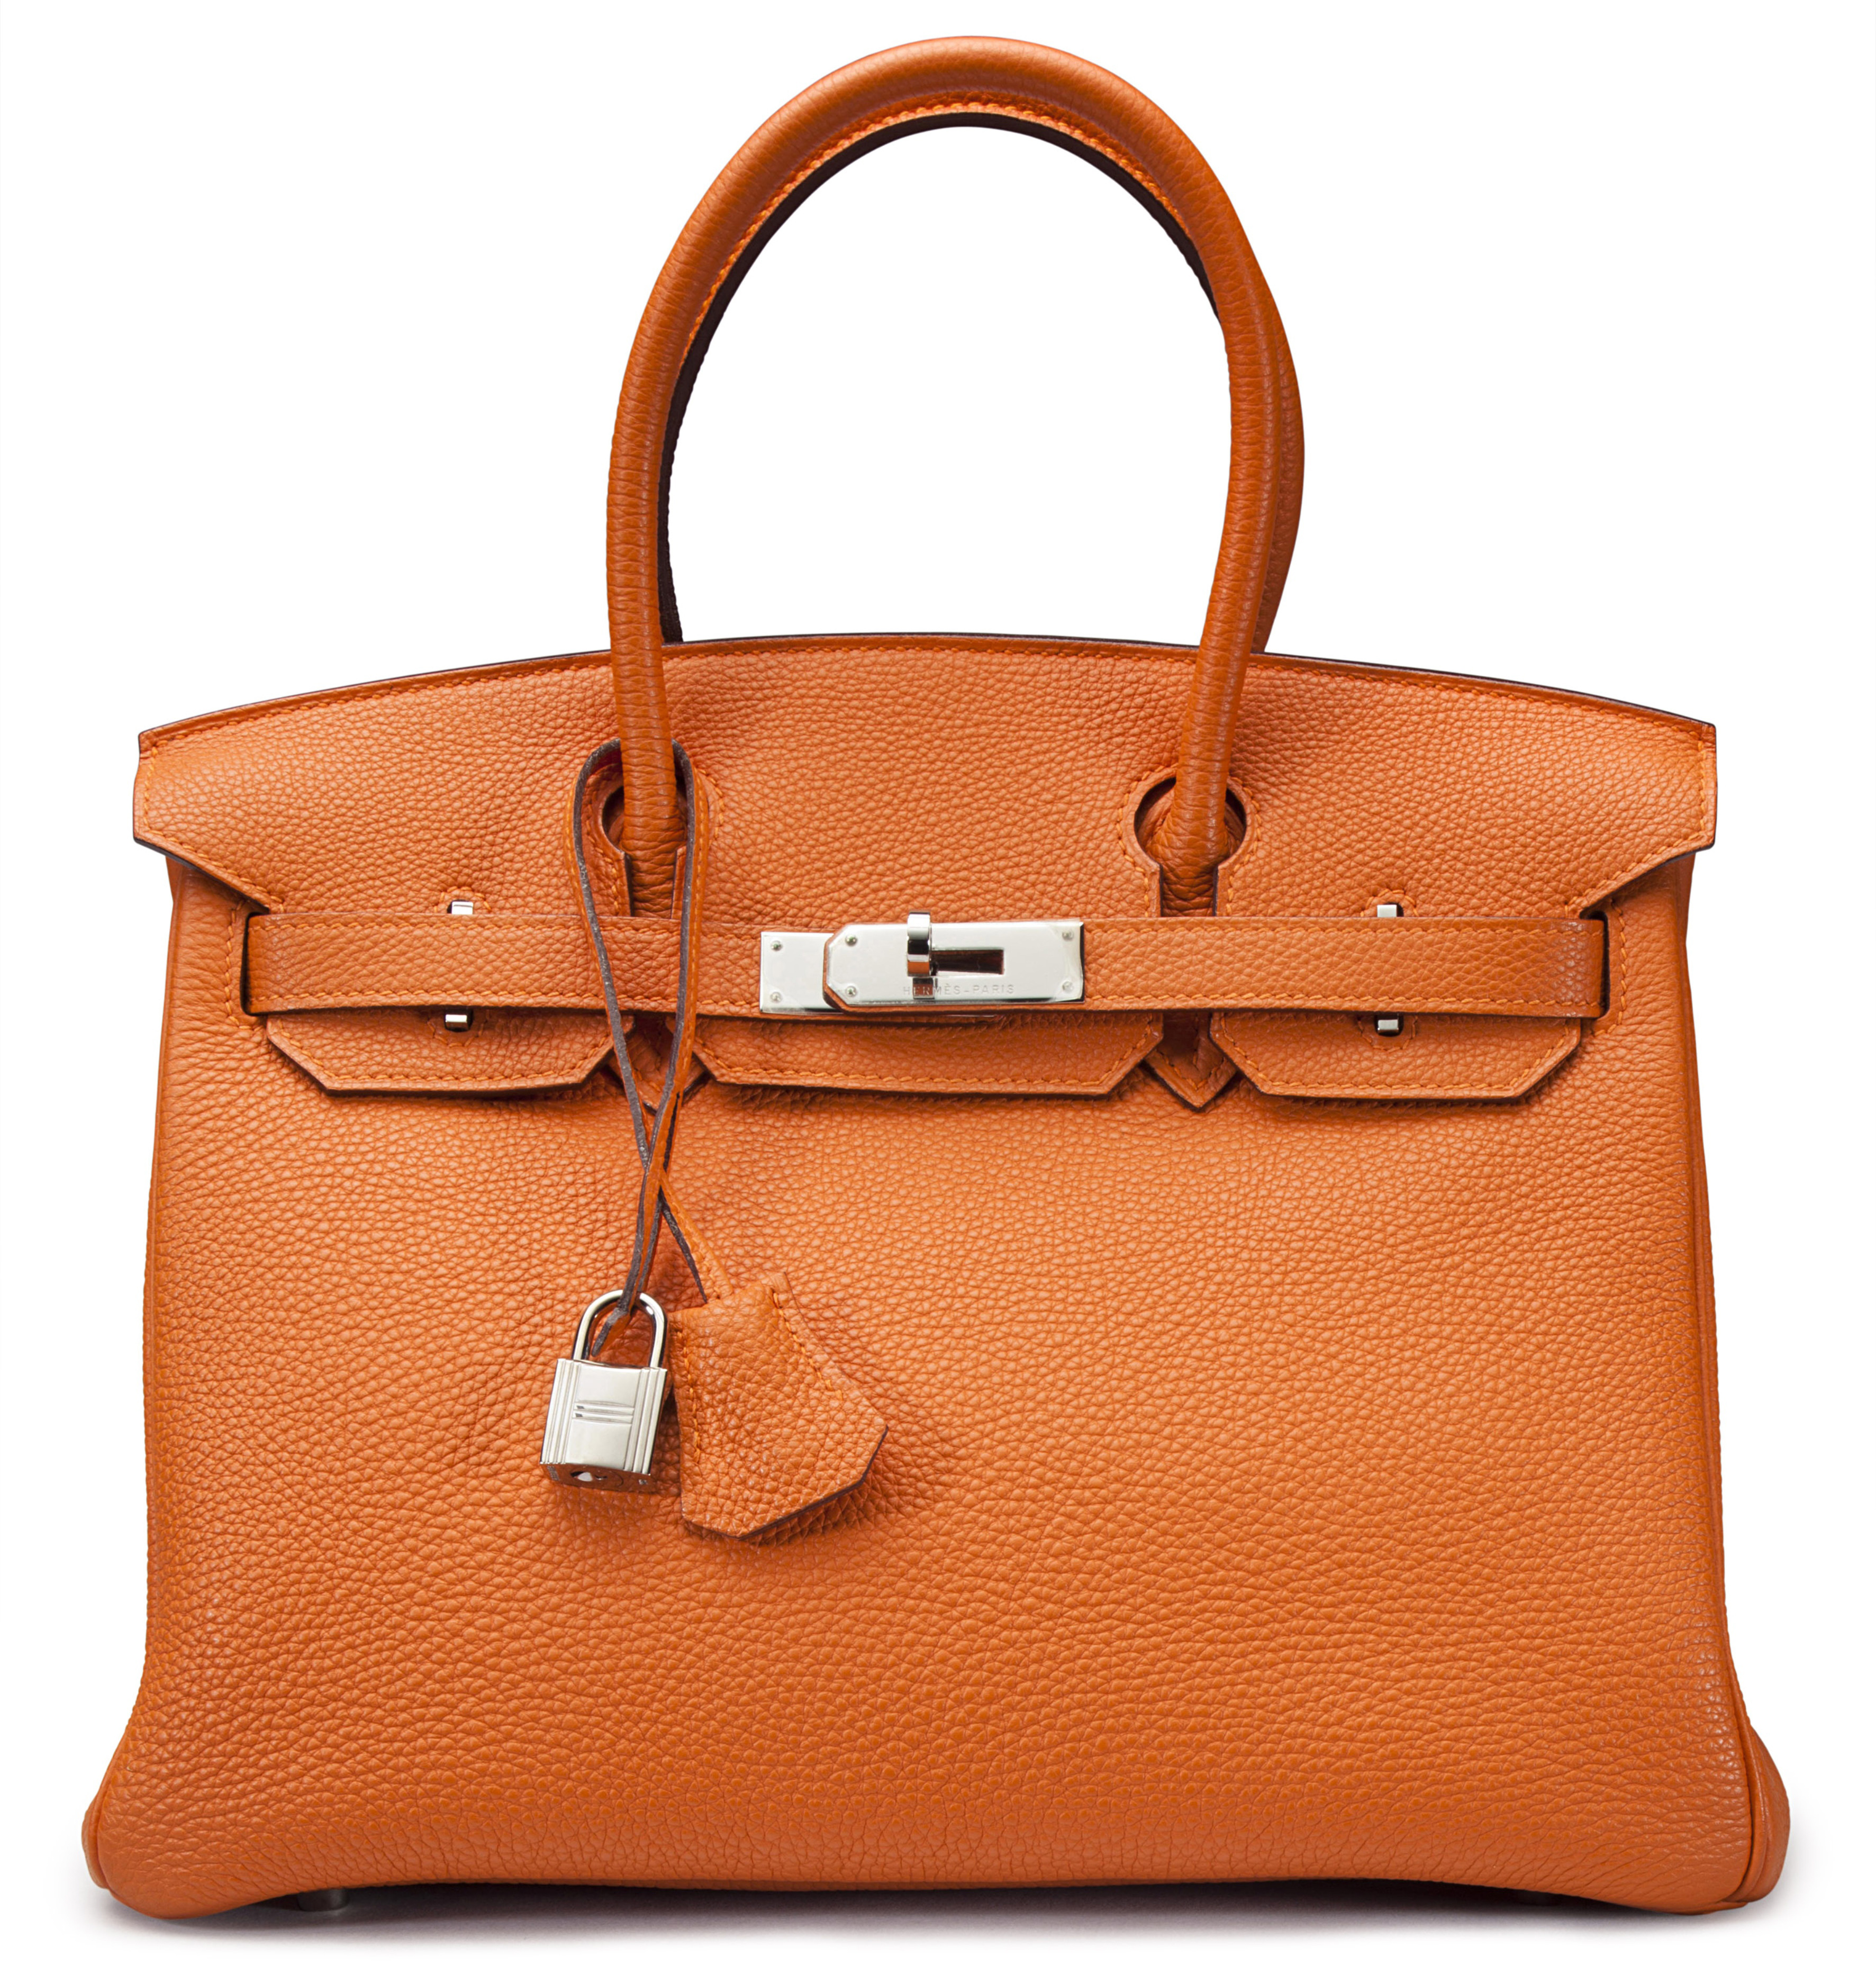 Hermes Birkin Bag, More Than Just a Bag | www.bagssaleusa.com